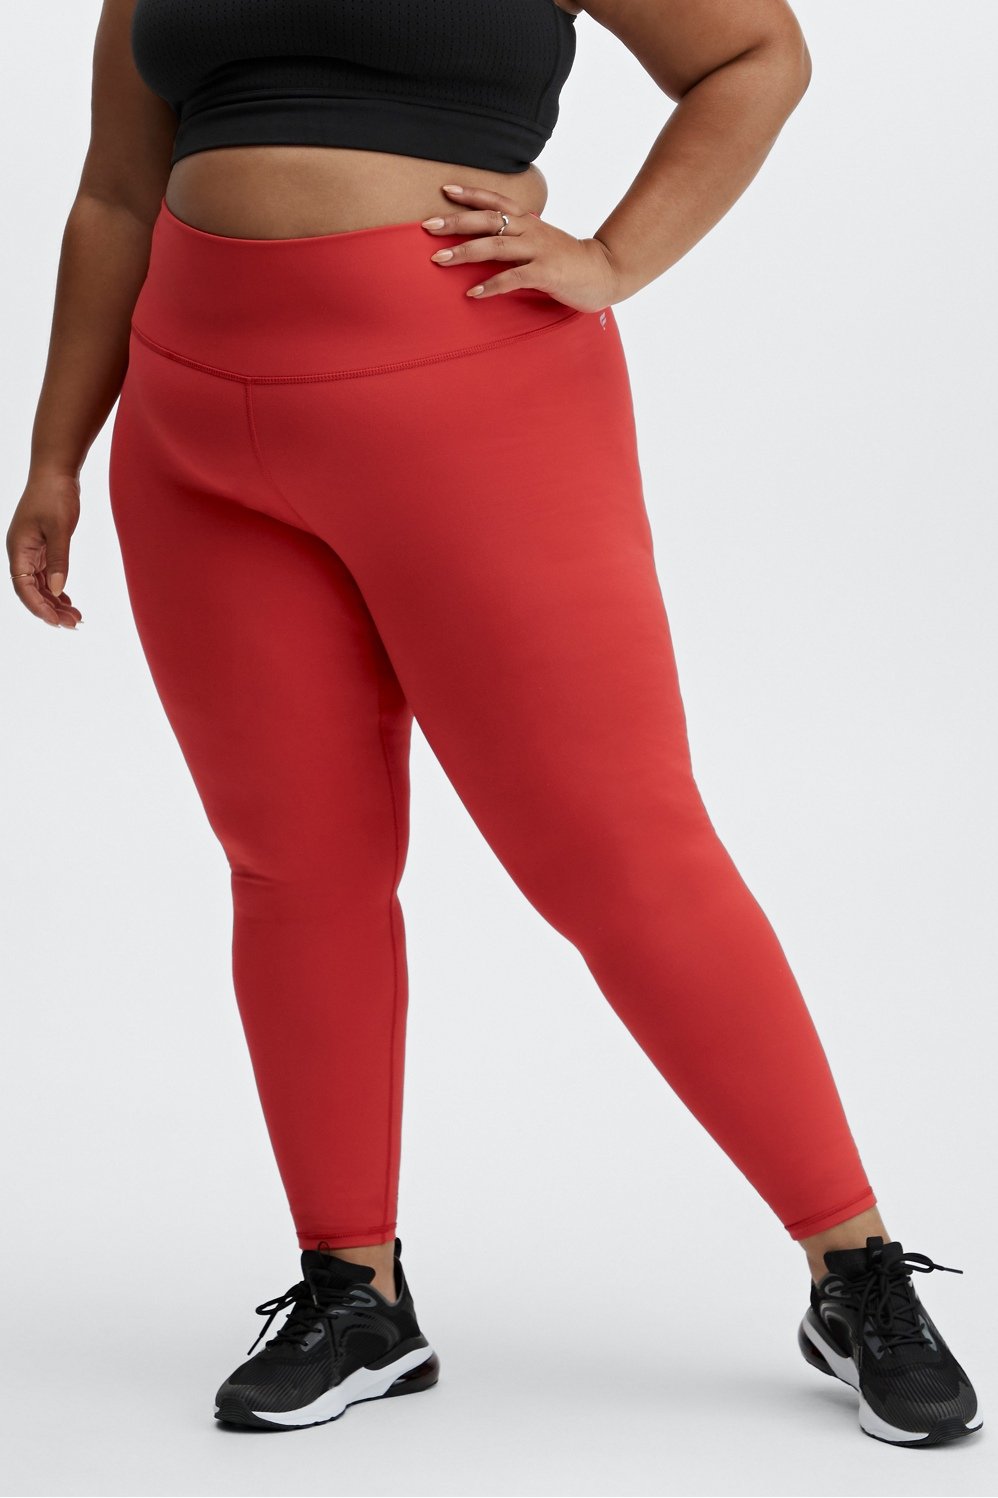 FANTADOOL High Elastic Leggings Pant Women Solid Stretch Compression  Sportswear Casual Yoga Jogging Leggings Pants With Pocket Dark Red L 